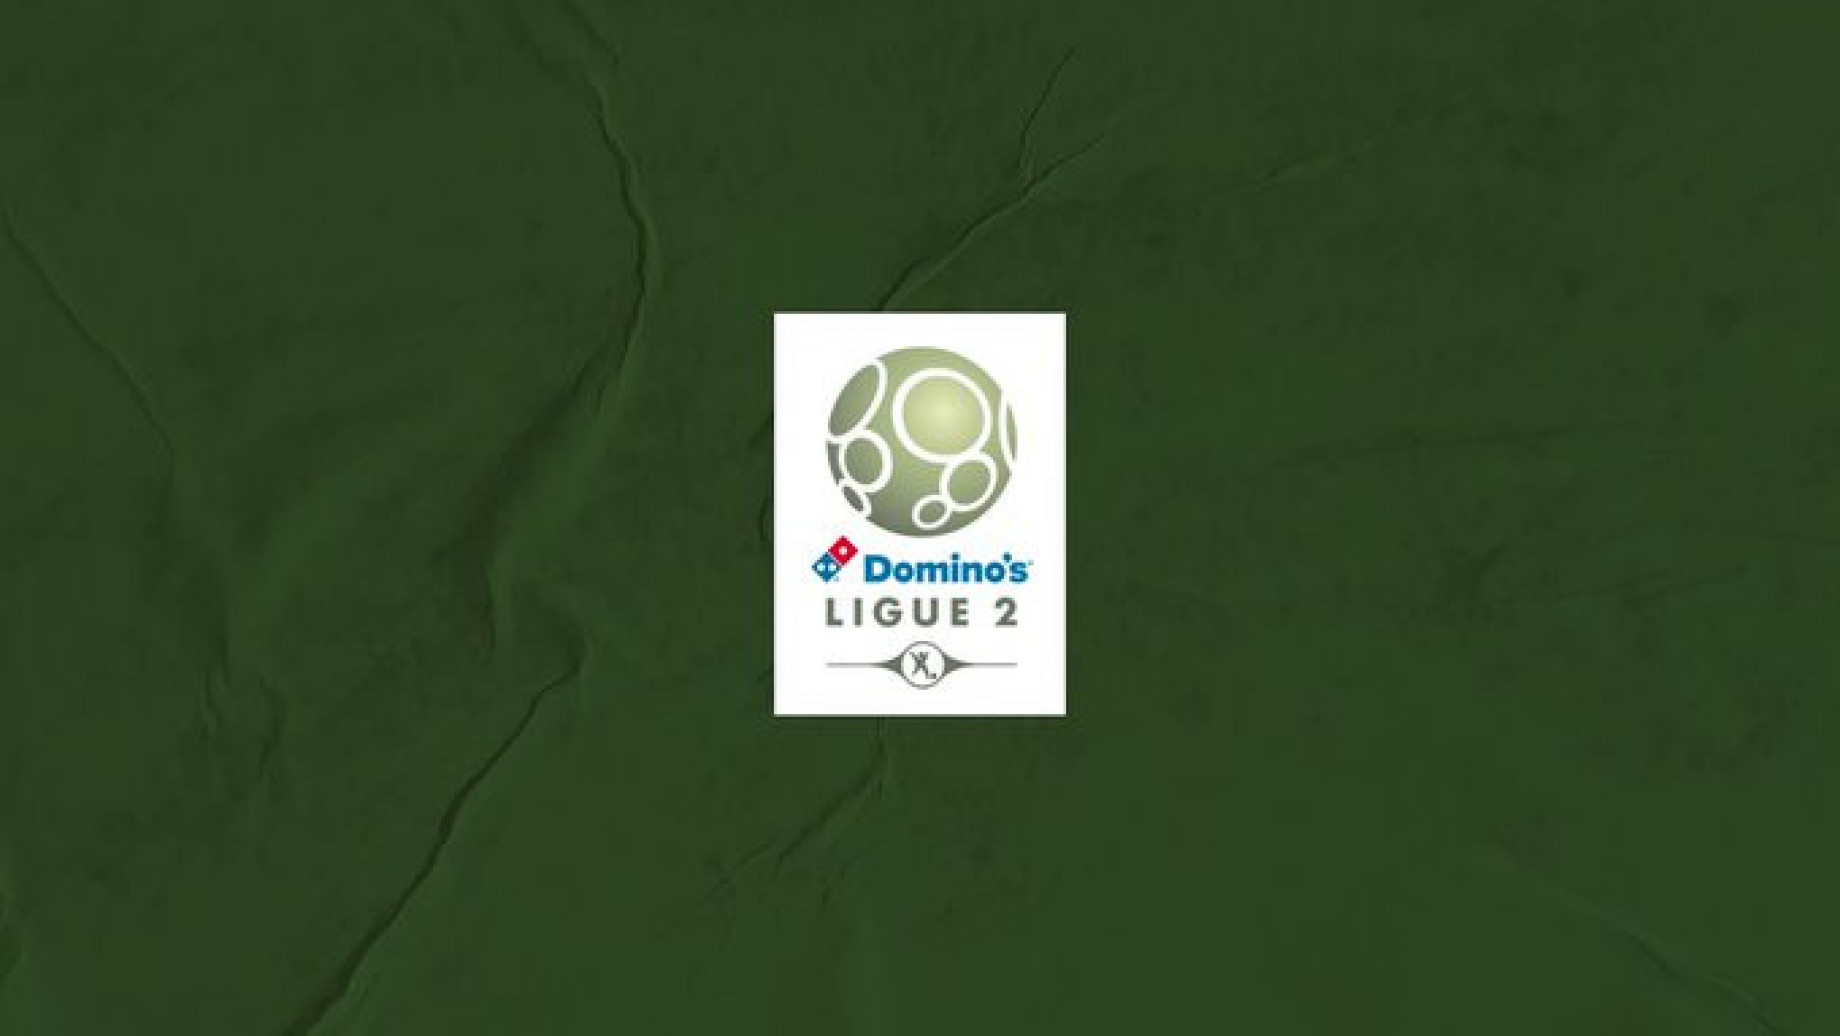 ligue 2 logo.jpg